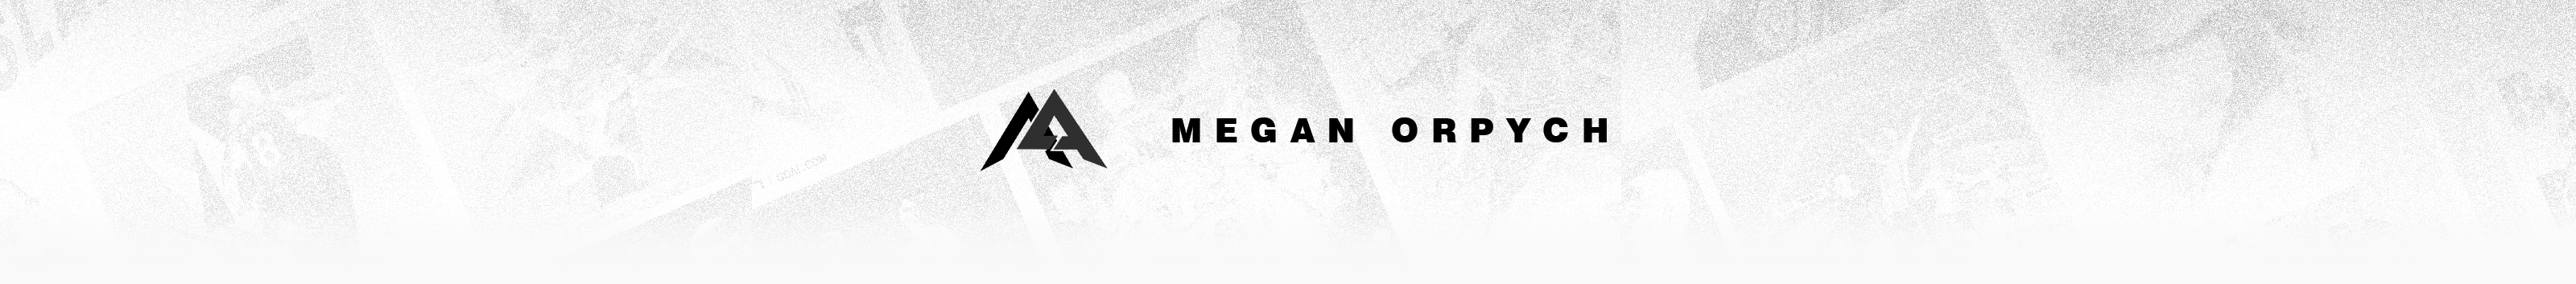 Magdalena 'Megan' Orpych's profile banner